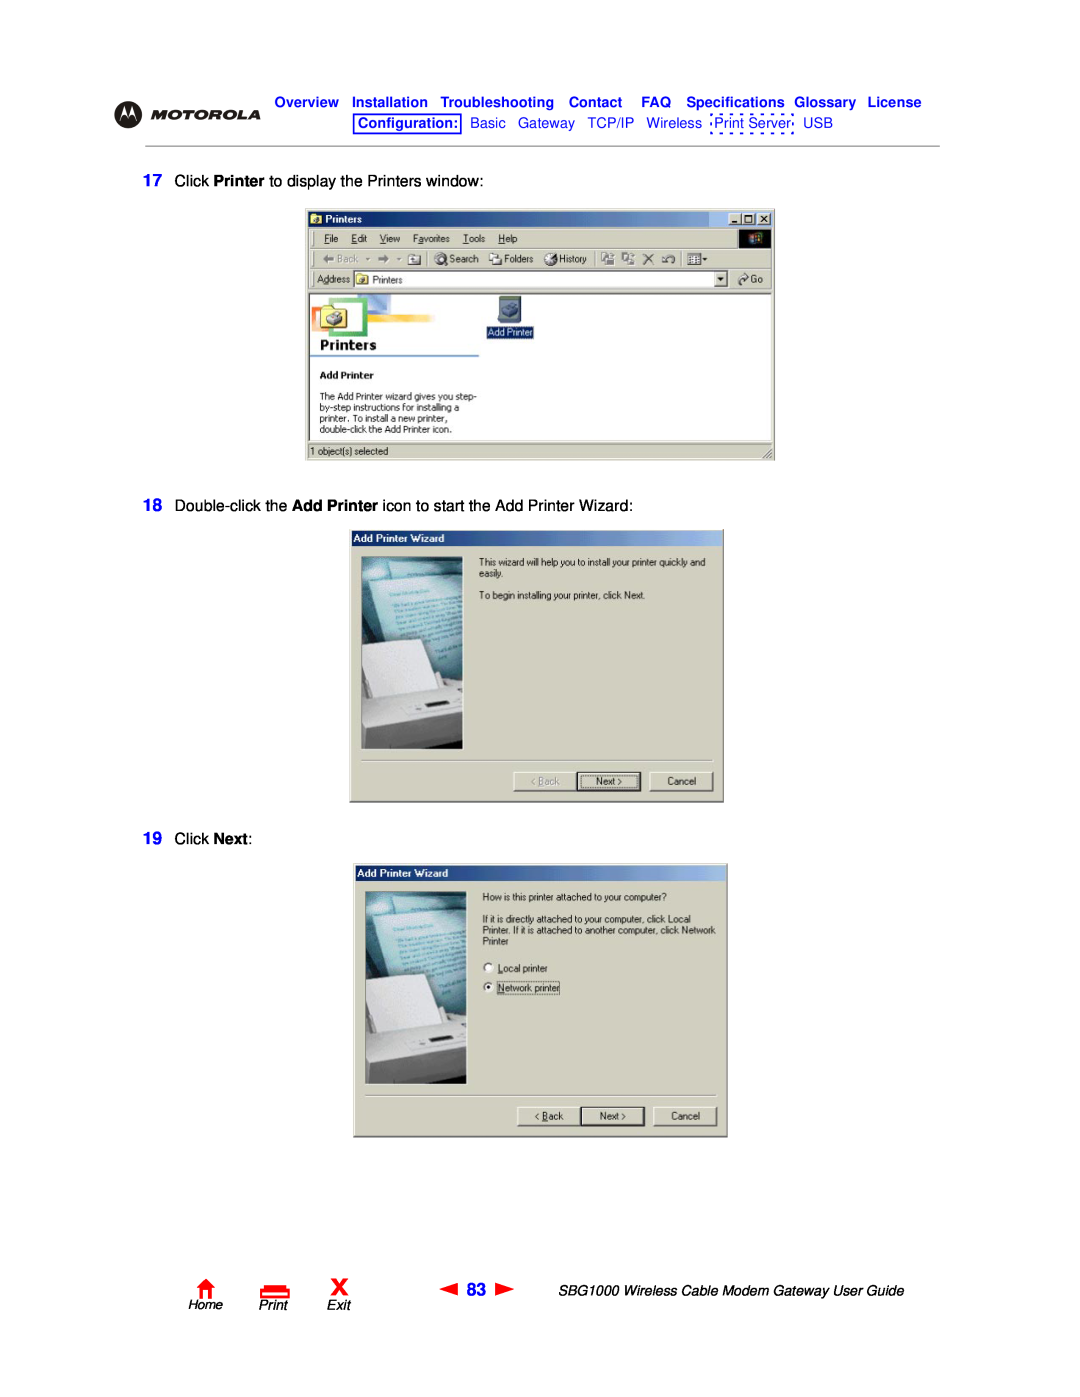 Motorola SBG1000 manual Click Printer to display the Printers window, Click Next, Home Print Exit 